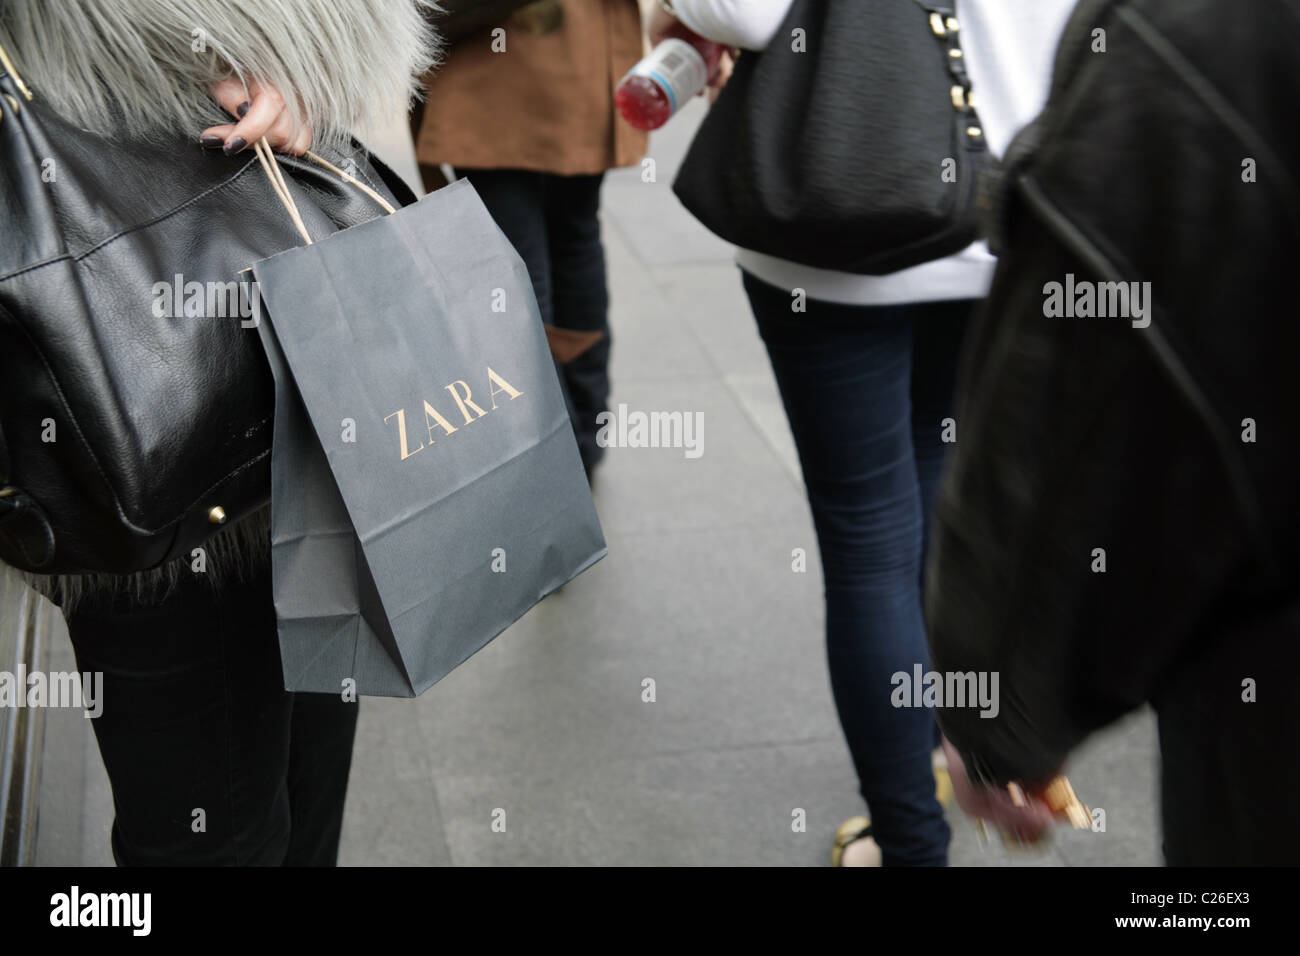 Woman holding a Zara shopping bag in 